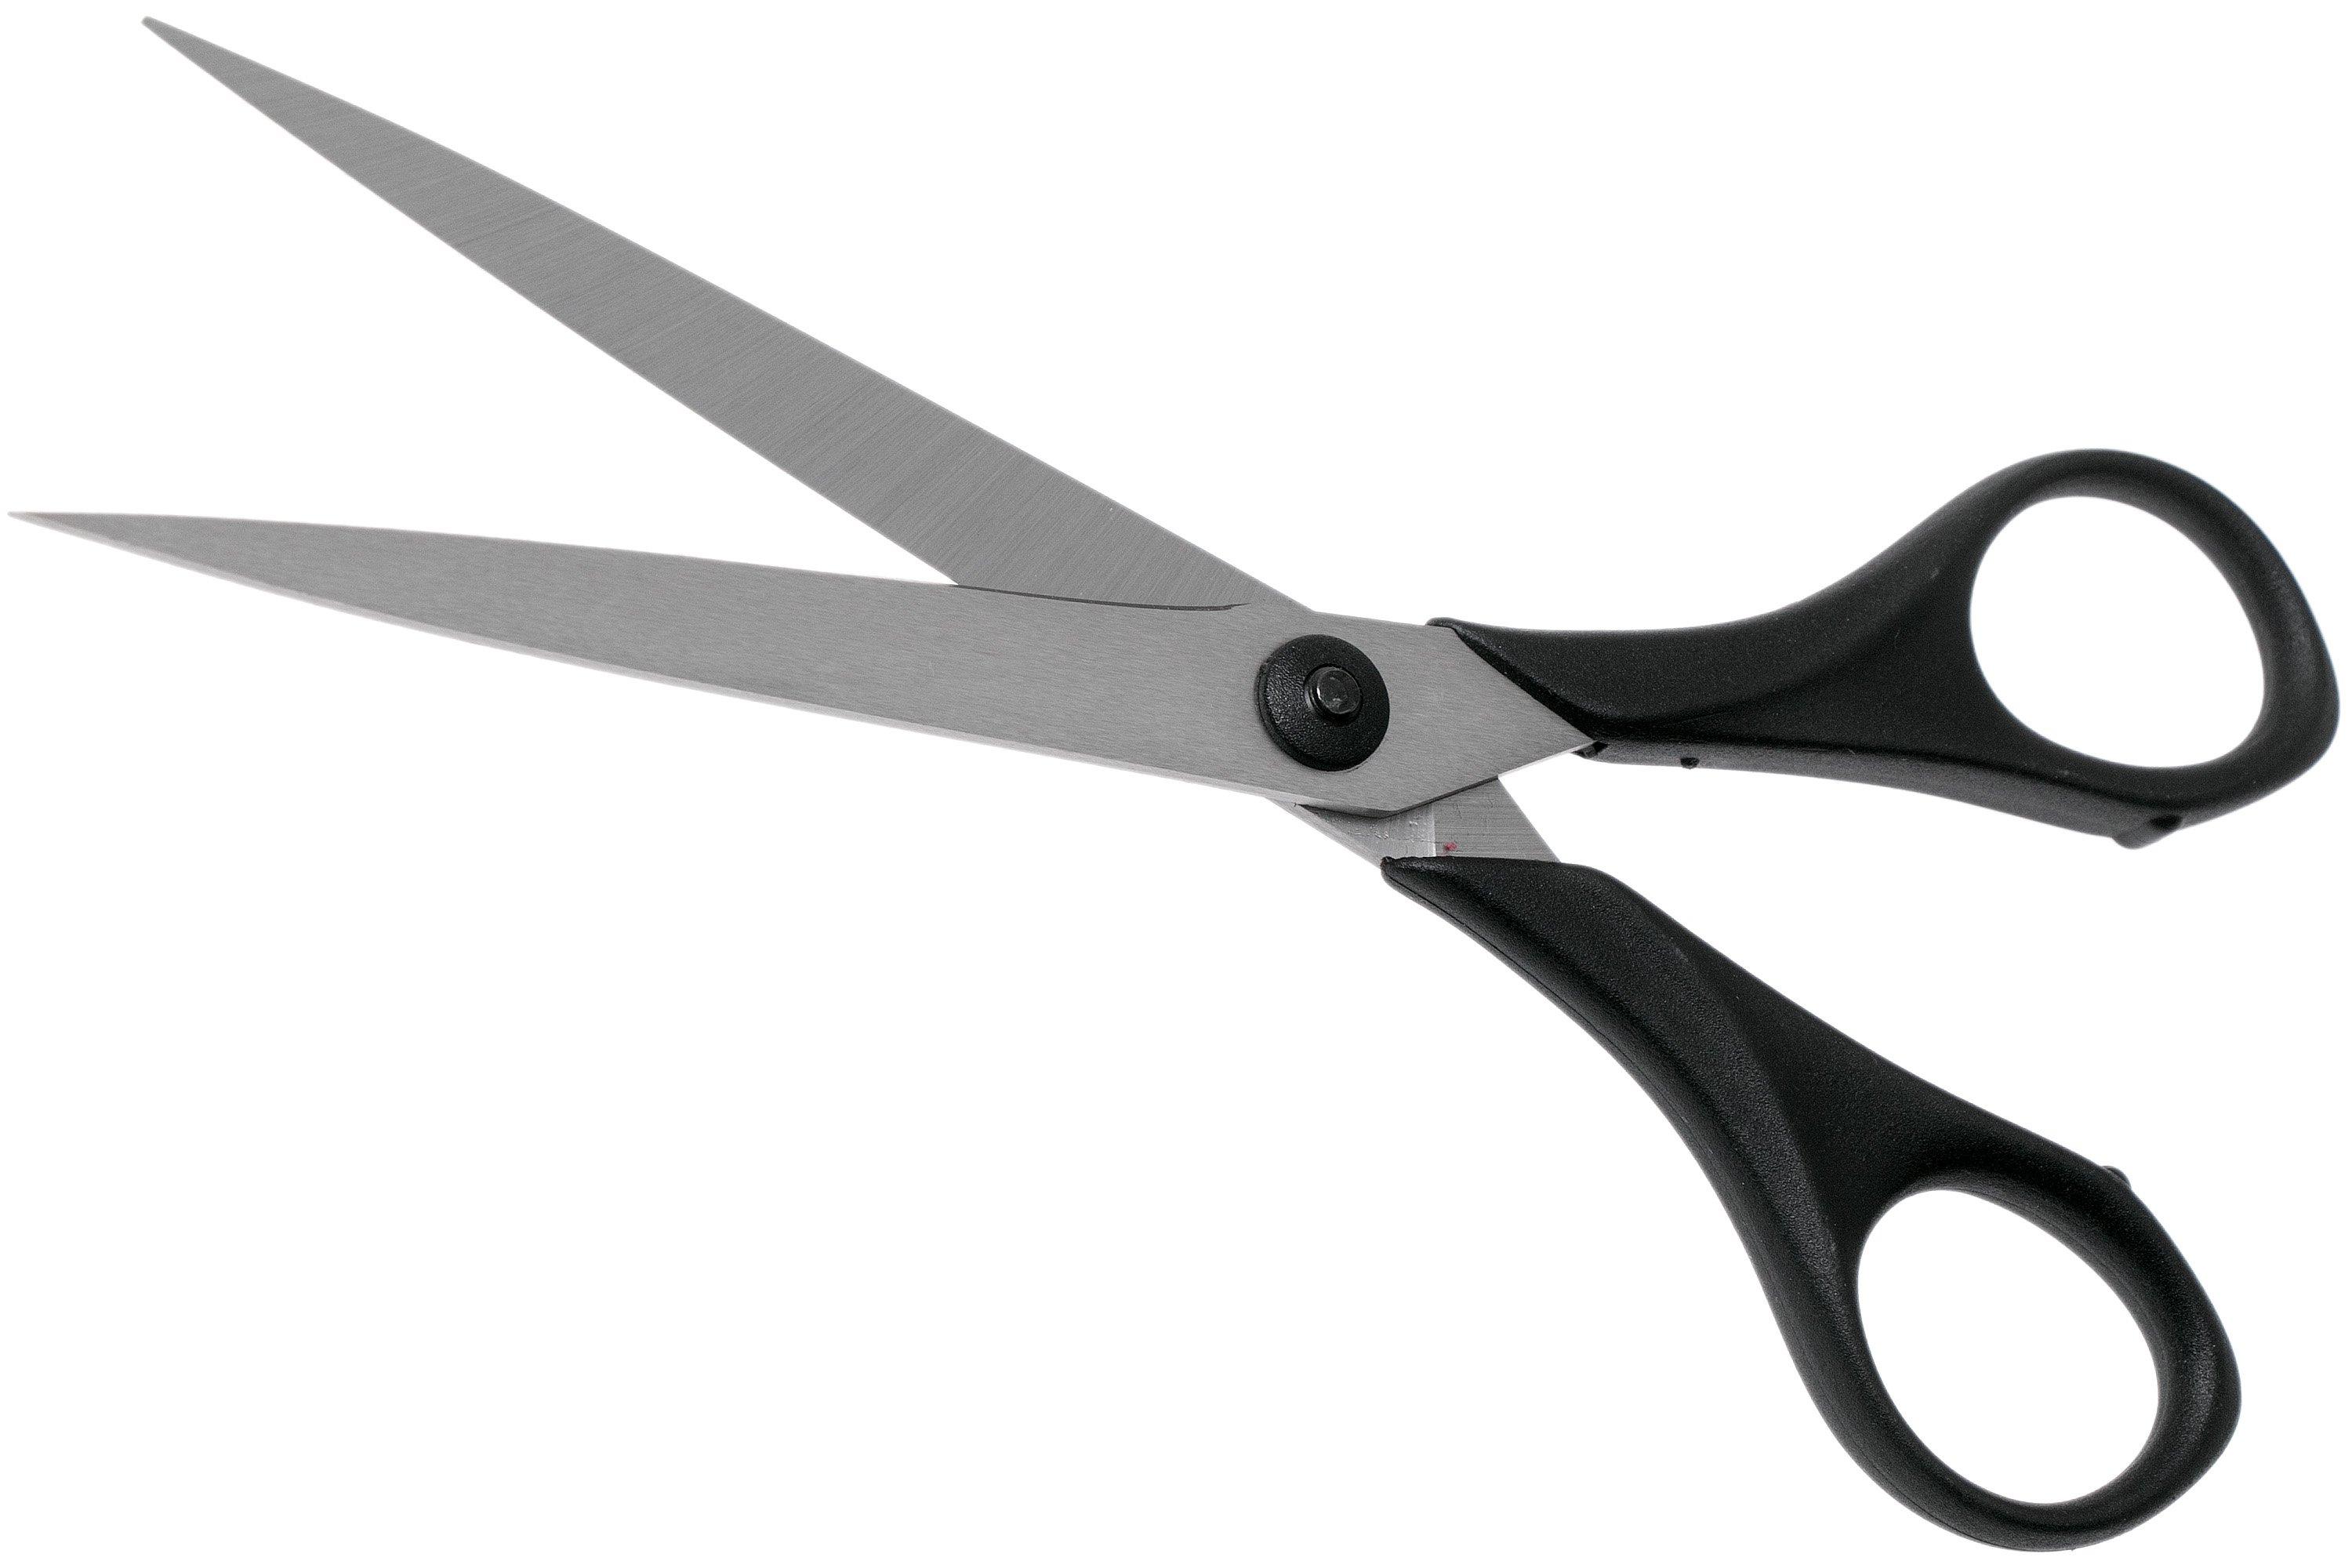 Victorinox 8.0987.19 household scissors 18 cm | Advantageously shopping at